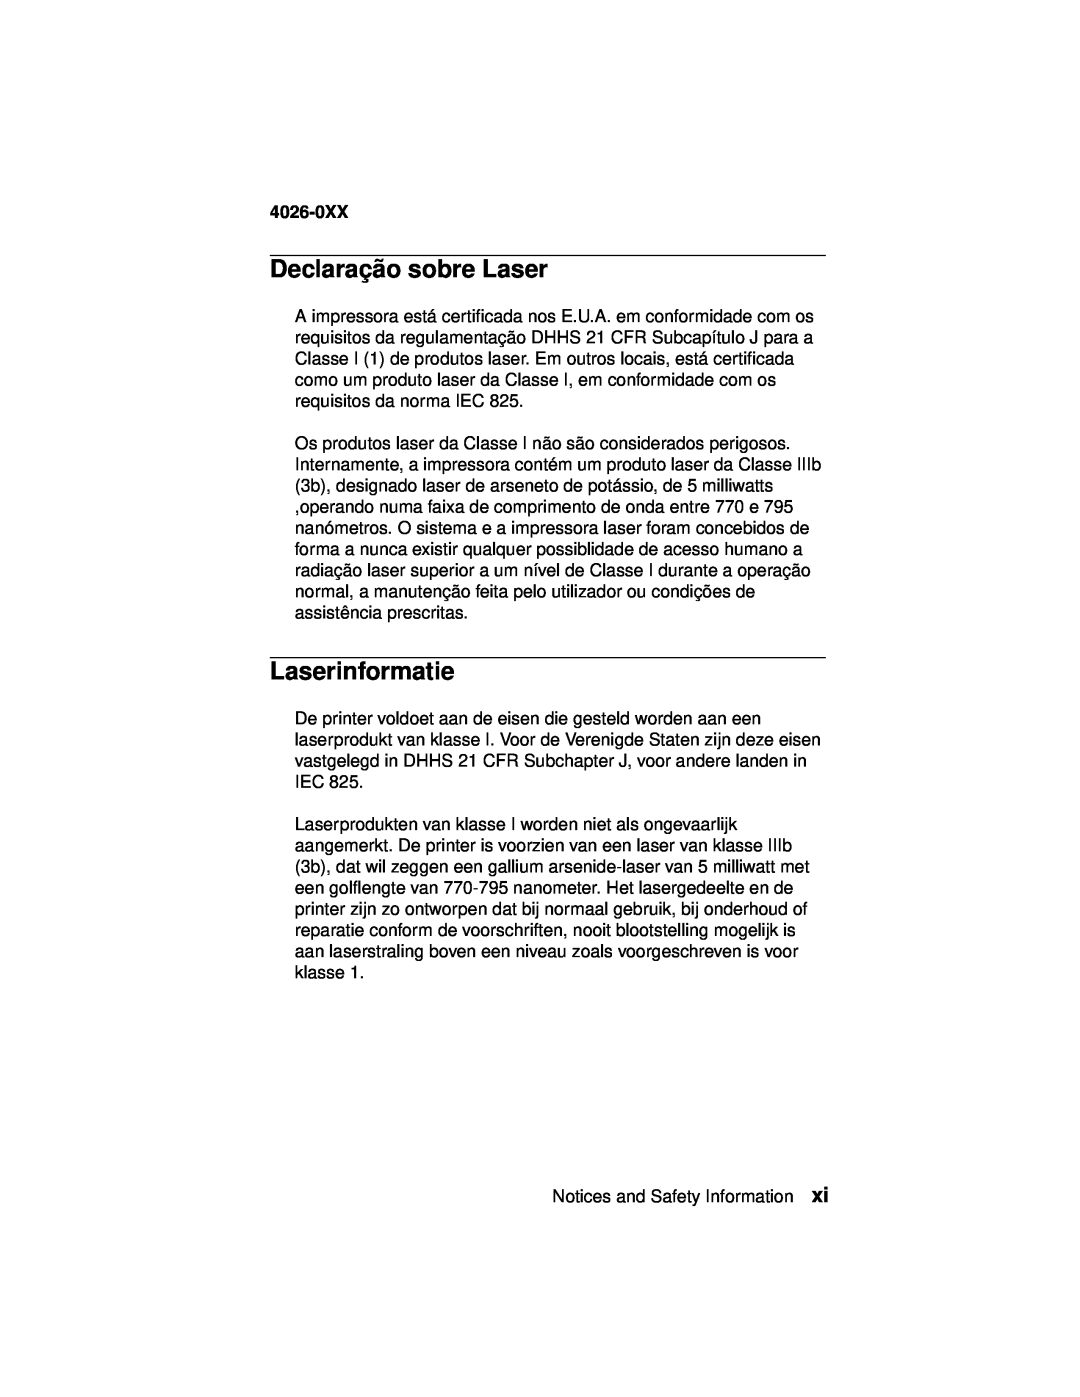 Lexmark 4026-0XX manual Declaração sobre Laser, Laserinformatie 